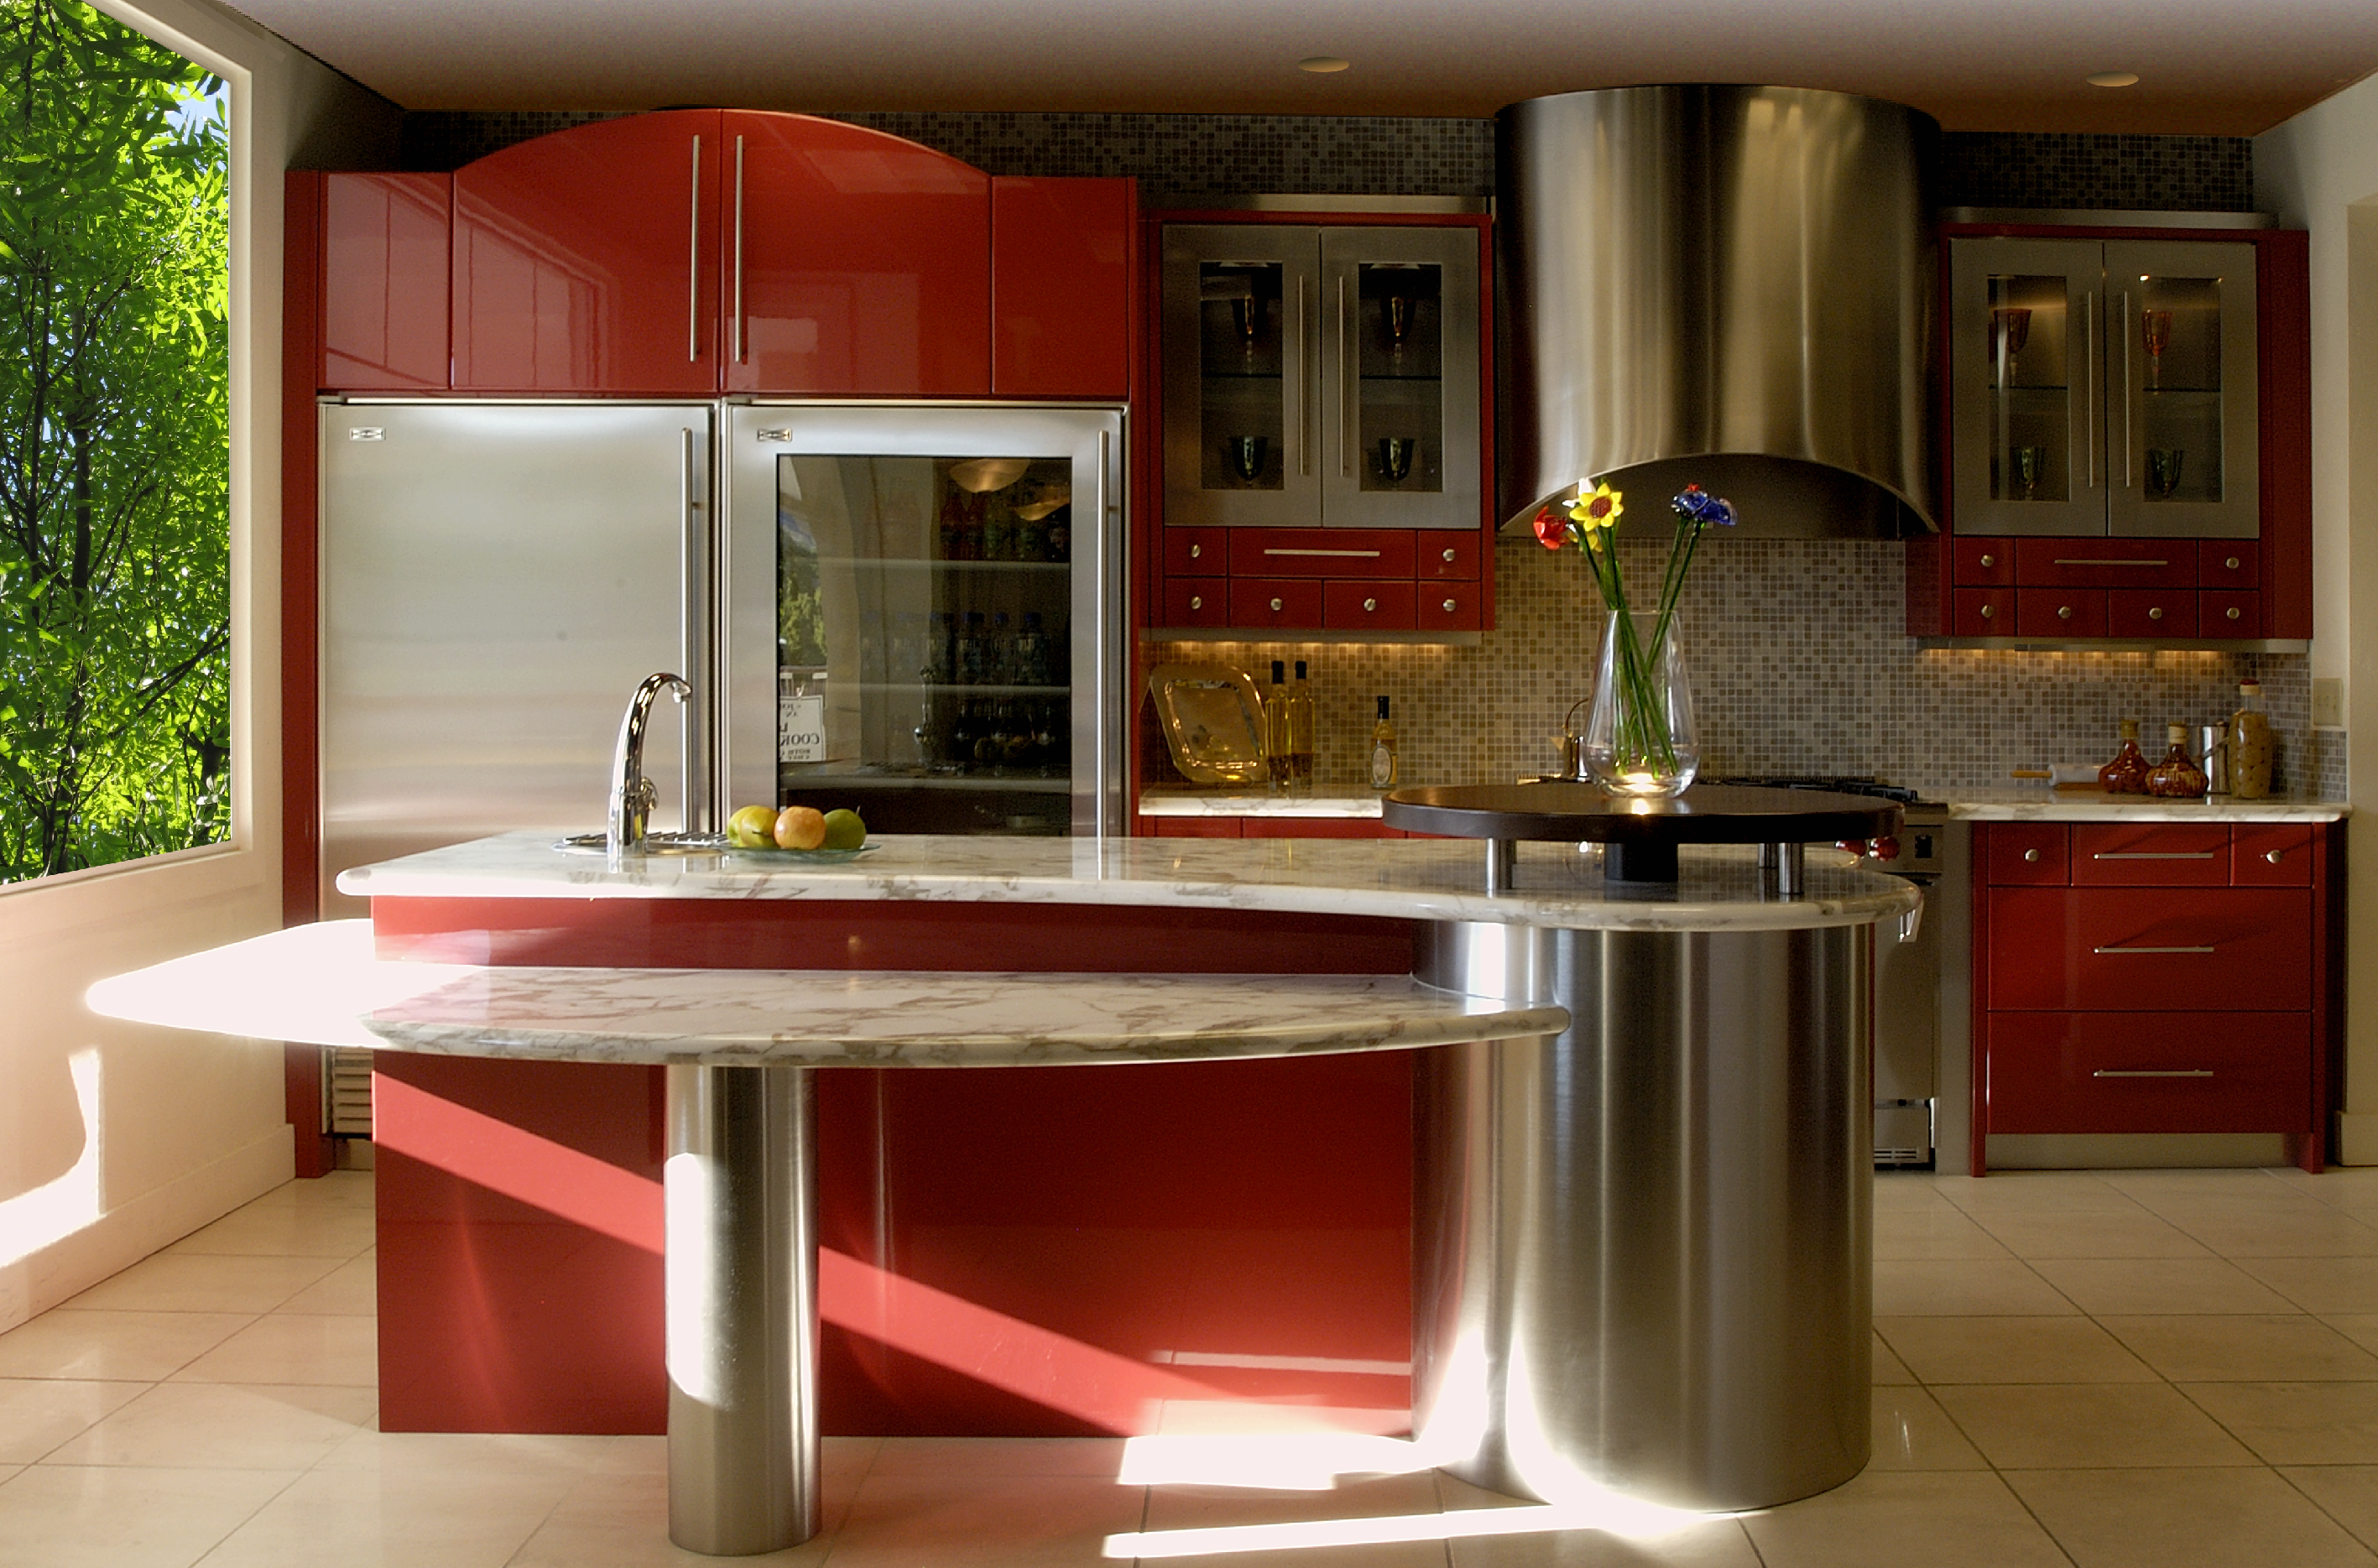 Big Red Kitchen Cabinets Interior Design Inspirations